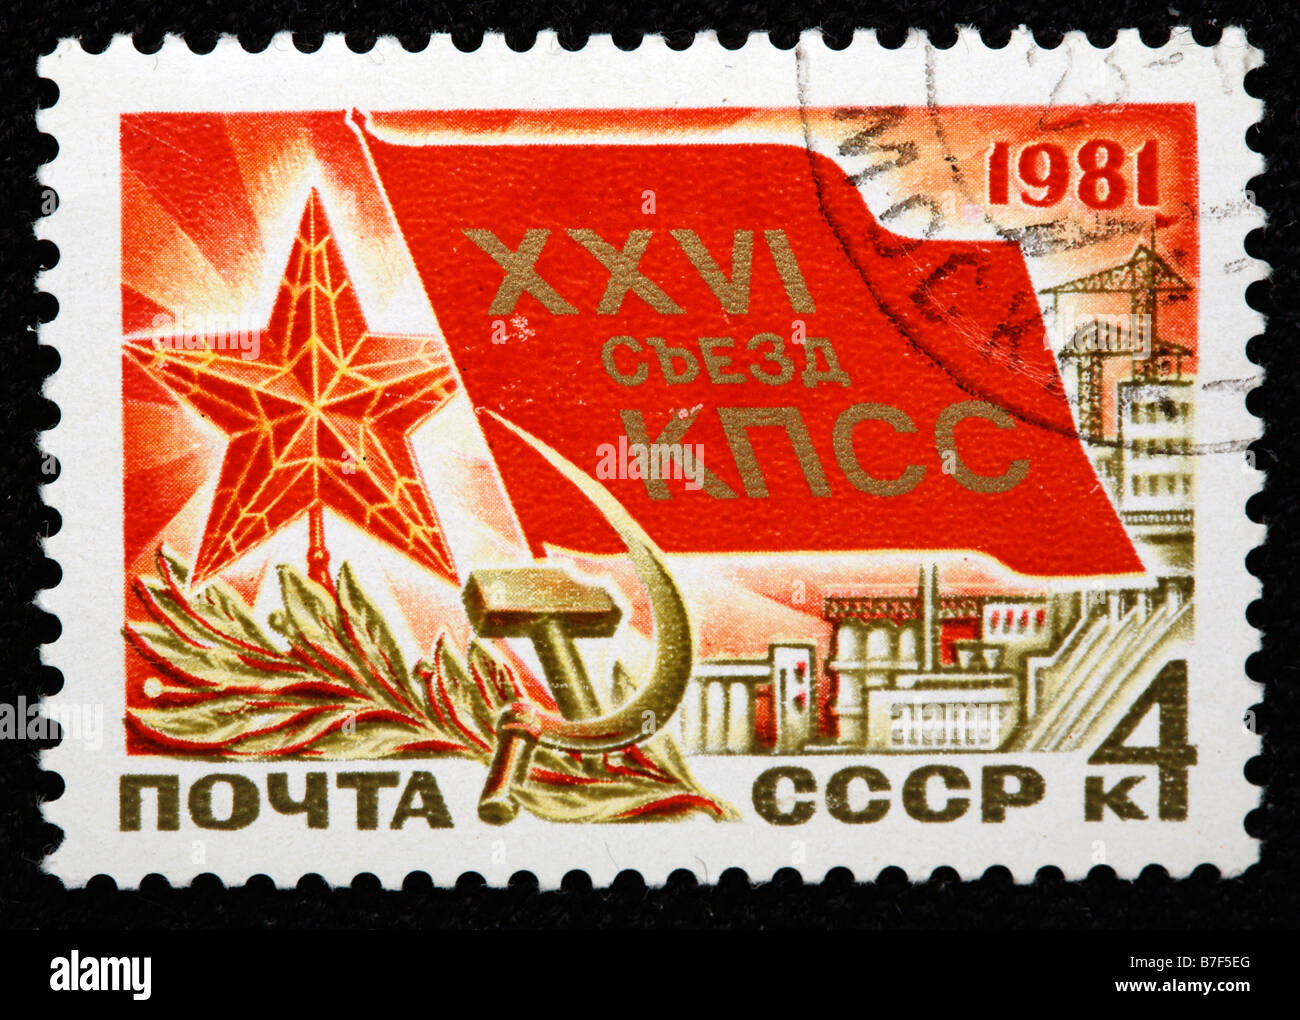 XXVI congress of communist party, postage stamp, USSR, 1981 Stock Photo